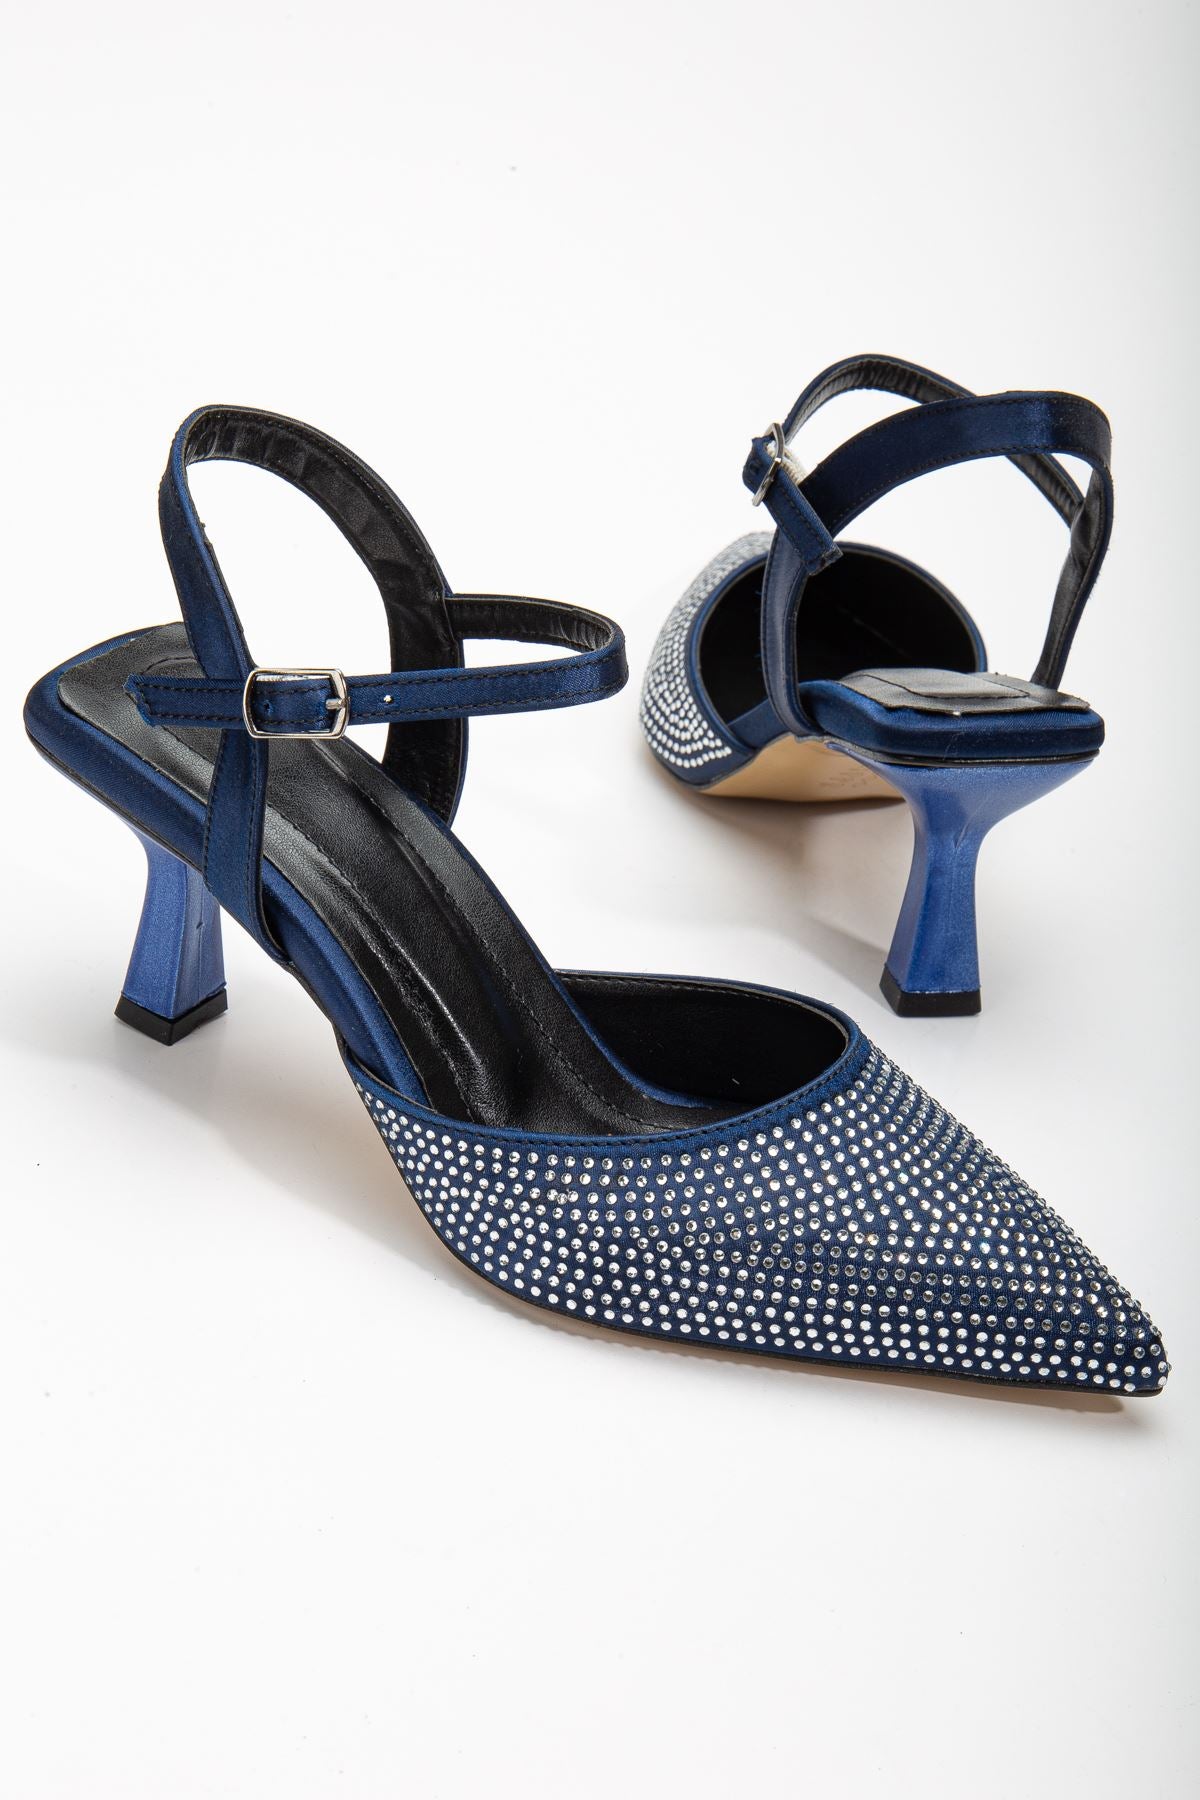 Sinda Navy Blue Satin Stone Detailed Thin Heeled Women's Shoes - STREETMODE ™